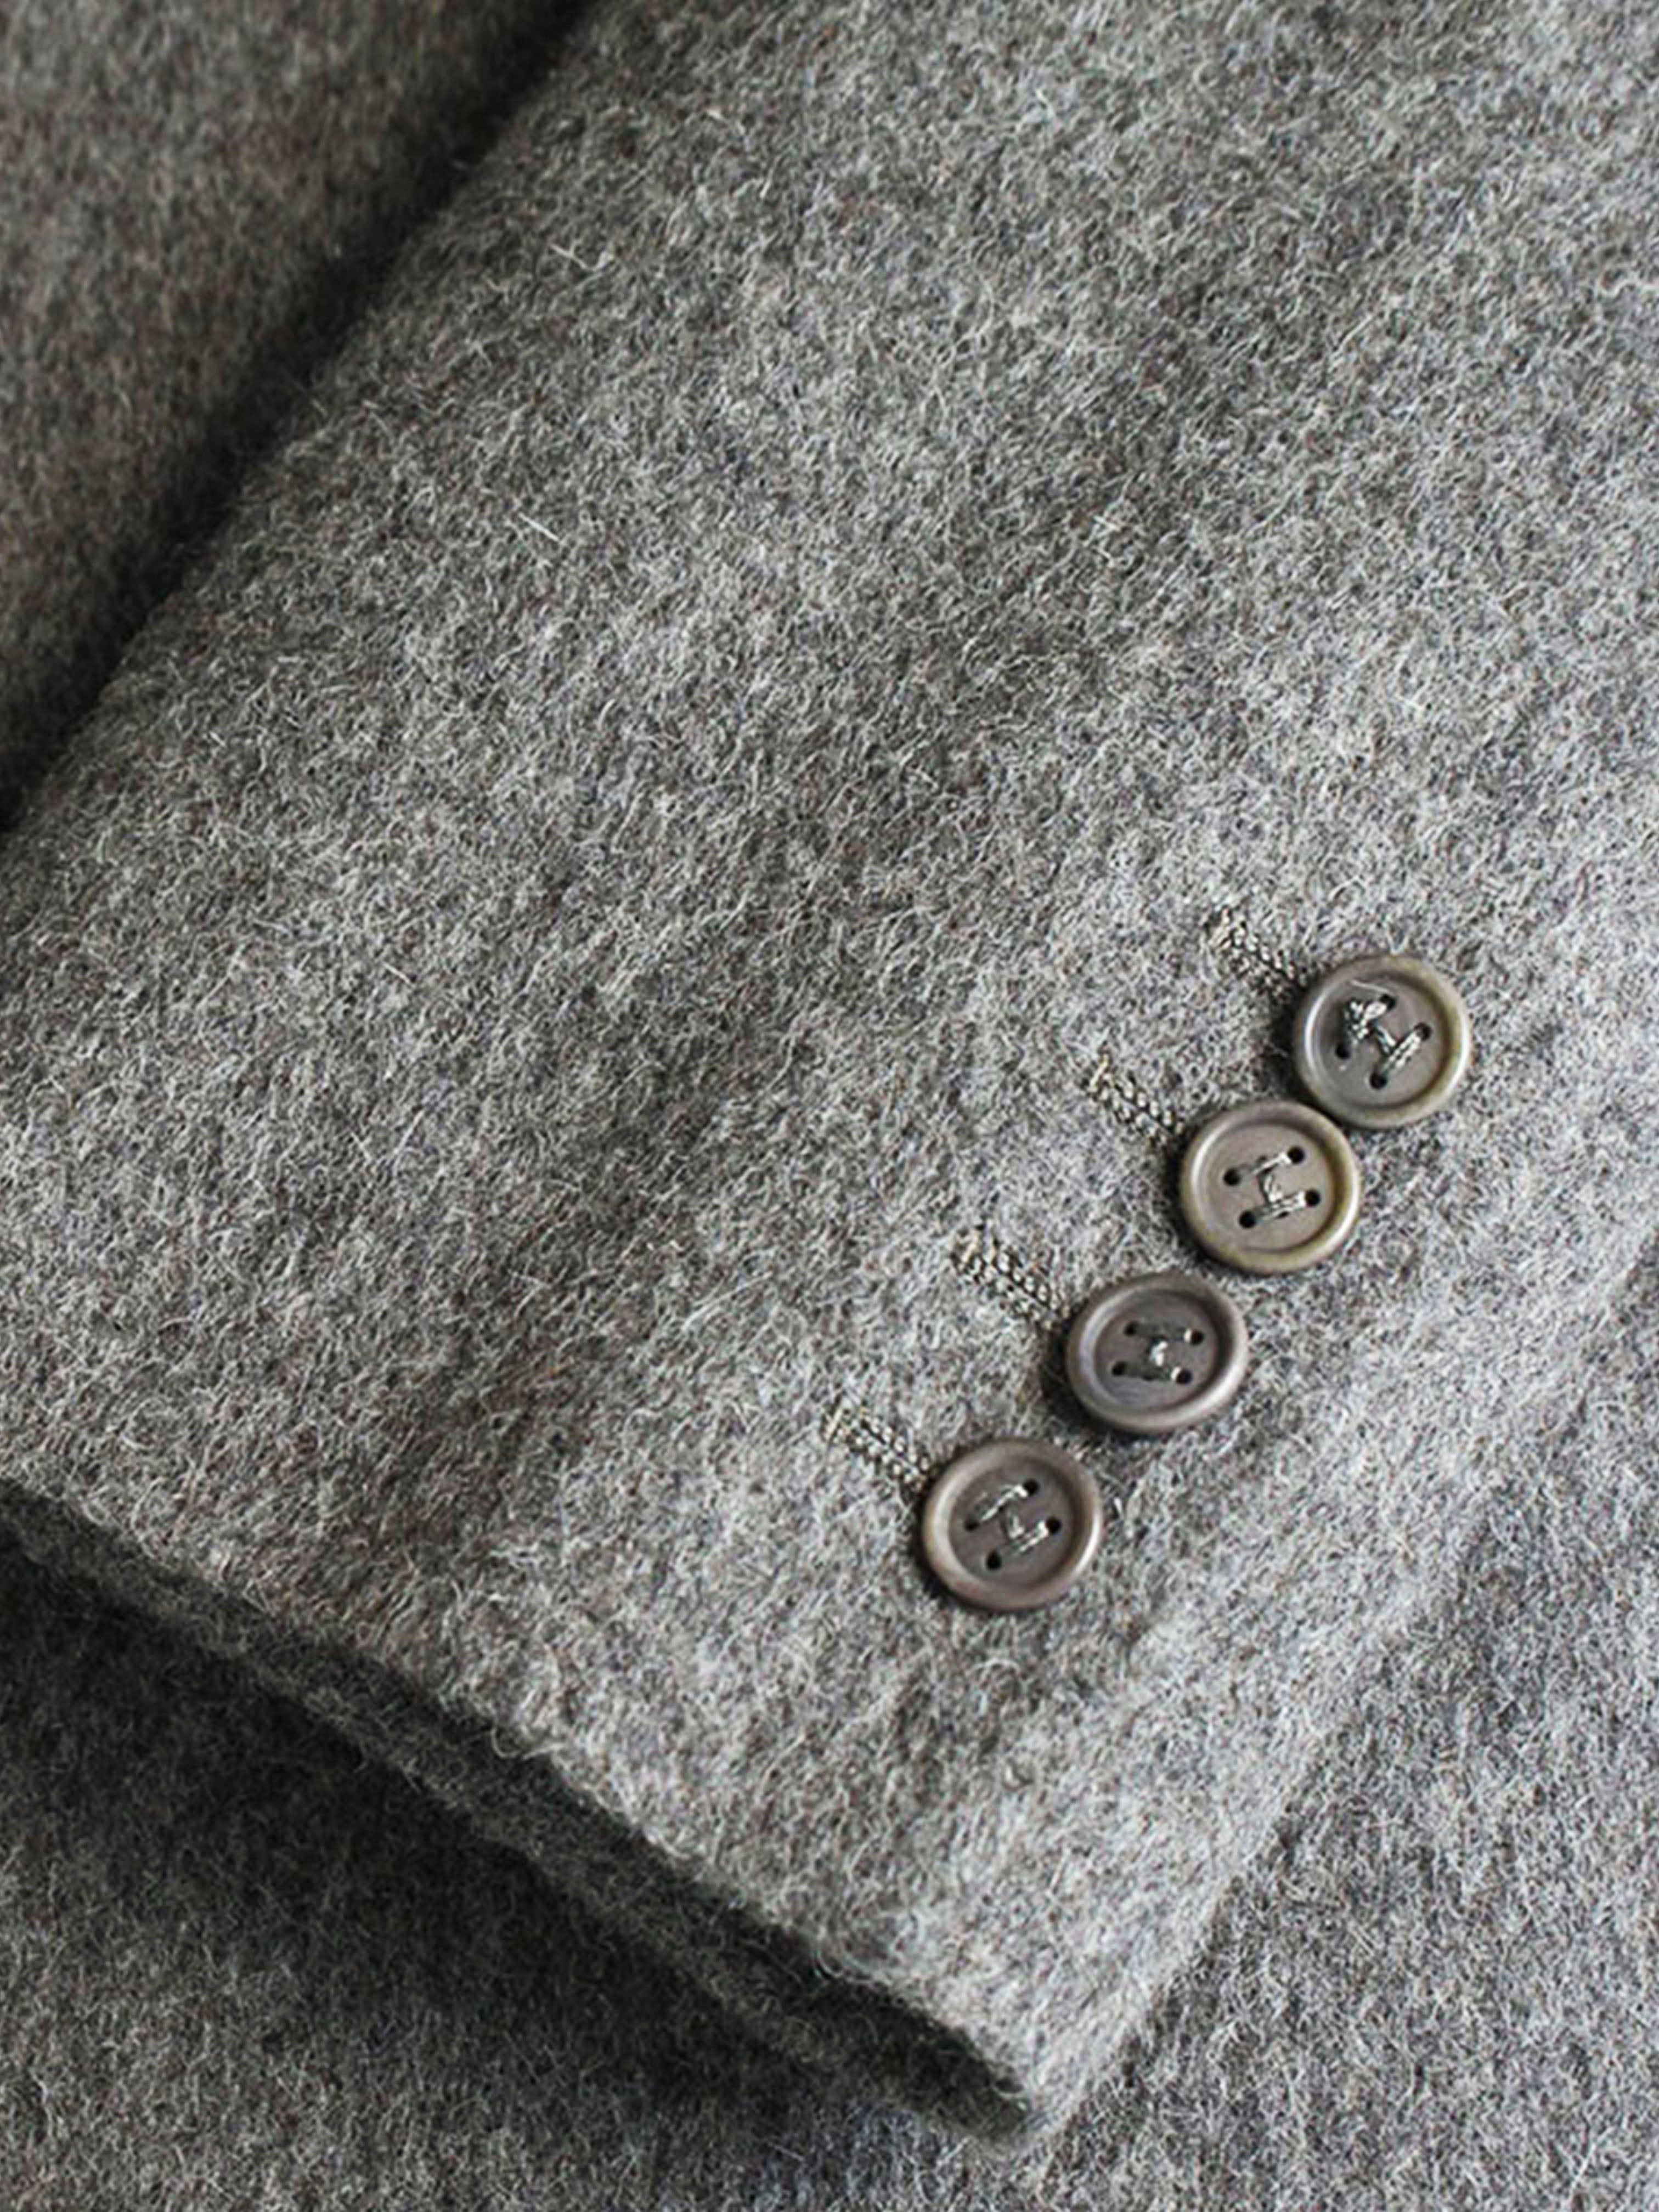 Hermès by Martin Margiela 2002 Gray Alpaca Coat